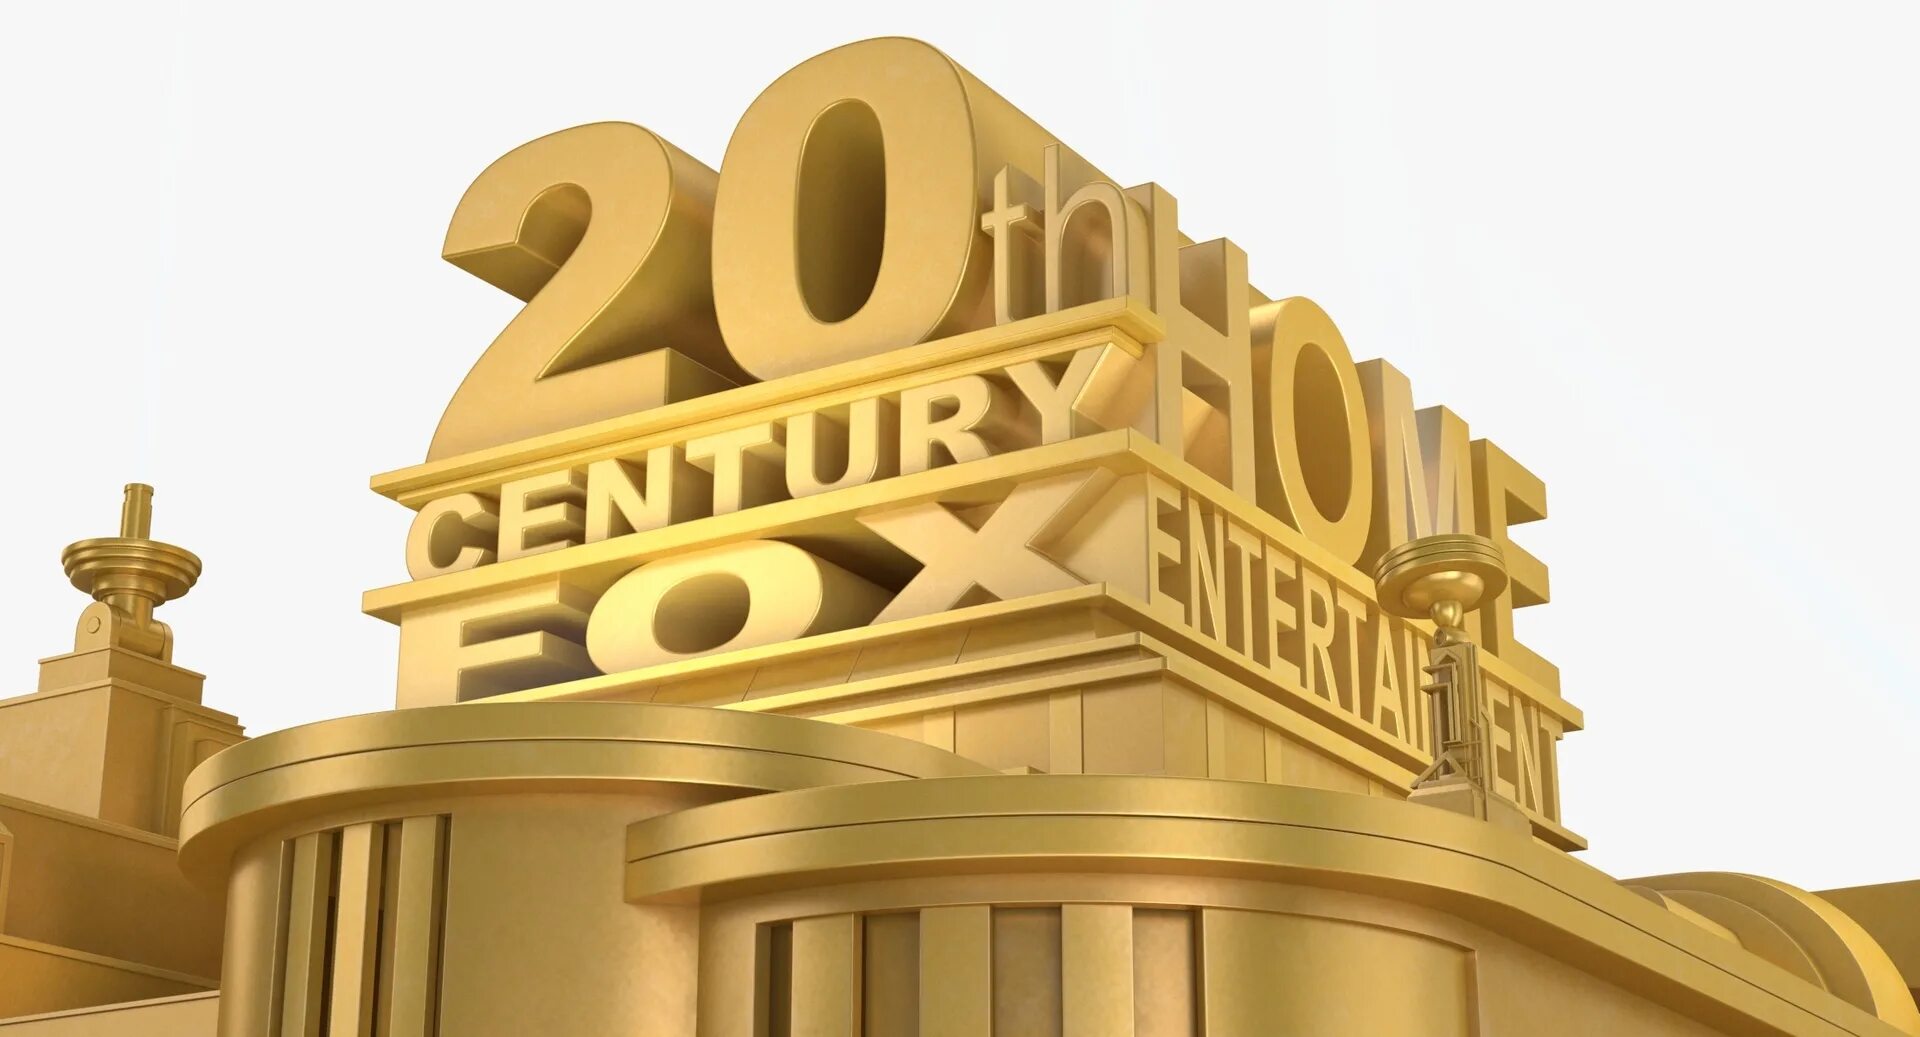 Sony 20th Century Fox. 20th Century Fox 3ds. 20th Century Fox logo. 20 Век Фокс Студиос. Th fox